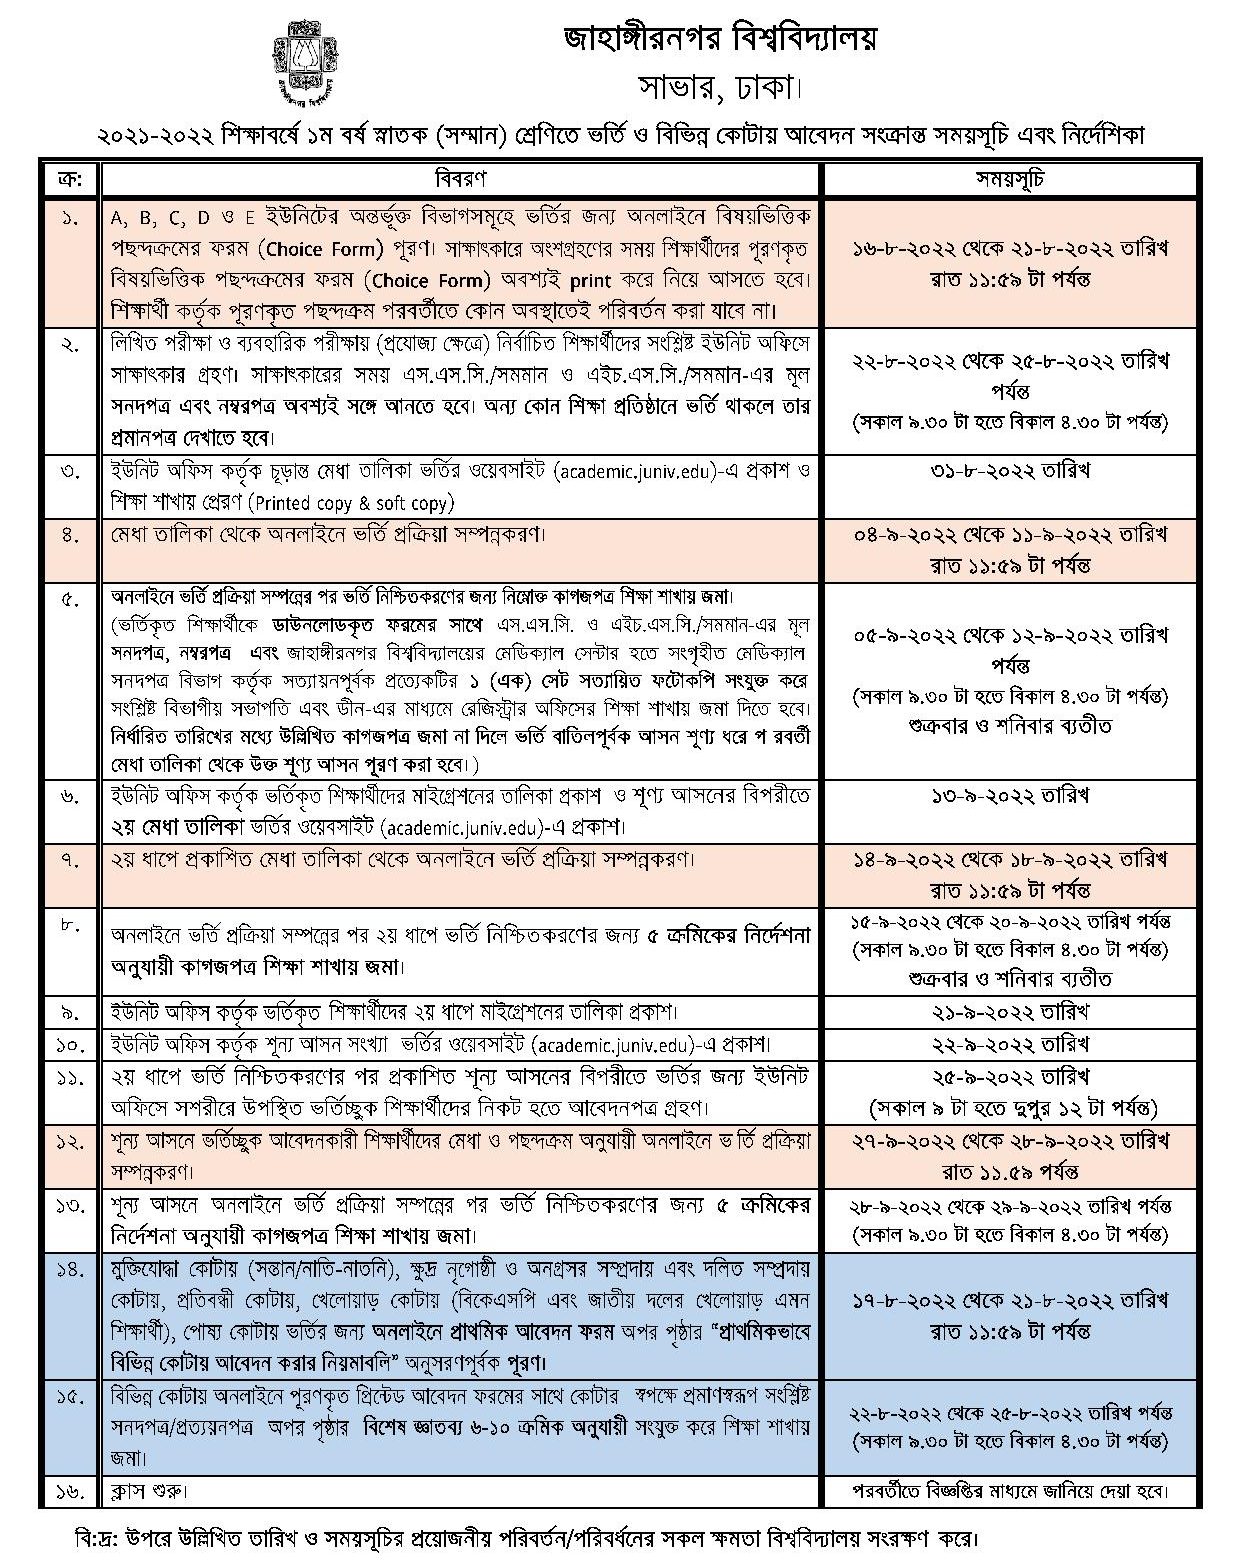 Jahangirnagar University Admission Circular 2021-22 1